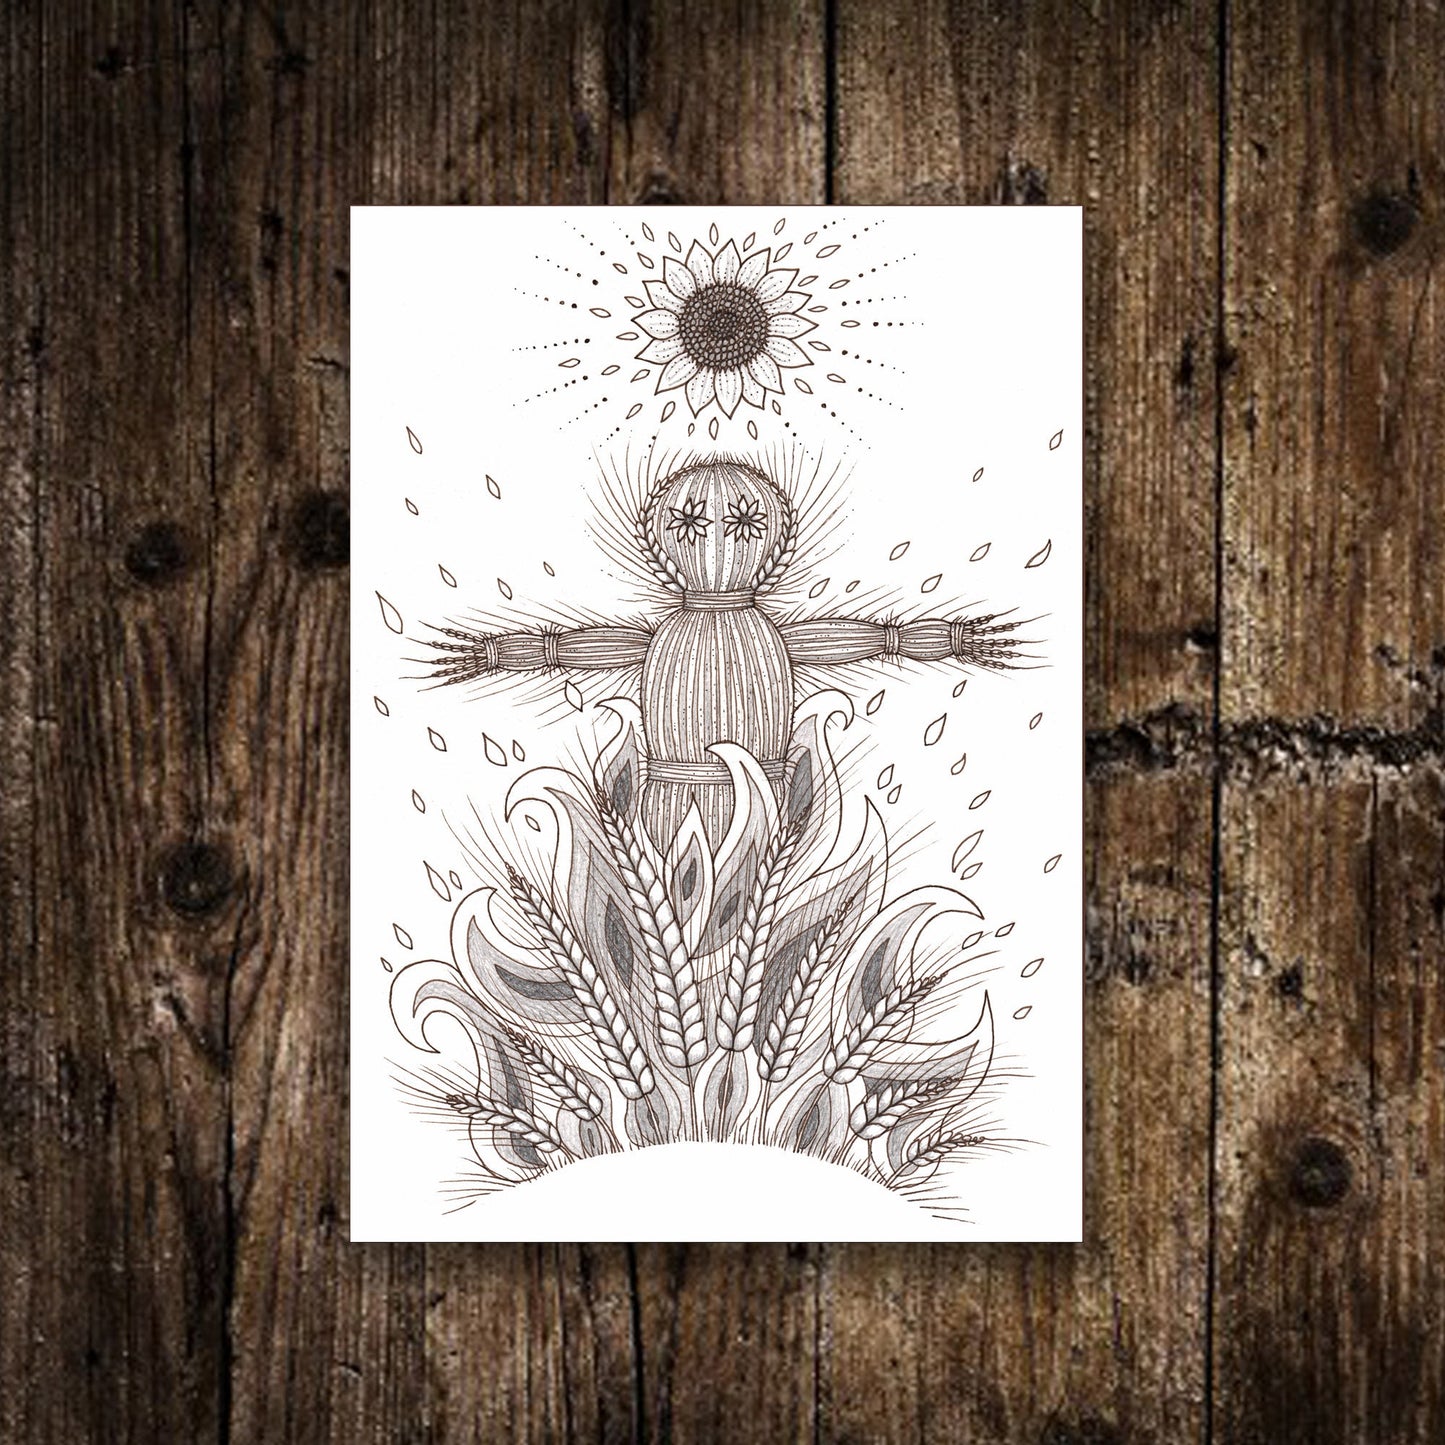 Mini John Barleycorn Print - Small A6 Wicker Man Illustration - Mini Black Or White Pagan Folklore Postcard Print - Spooky Corn Dolly Art